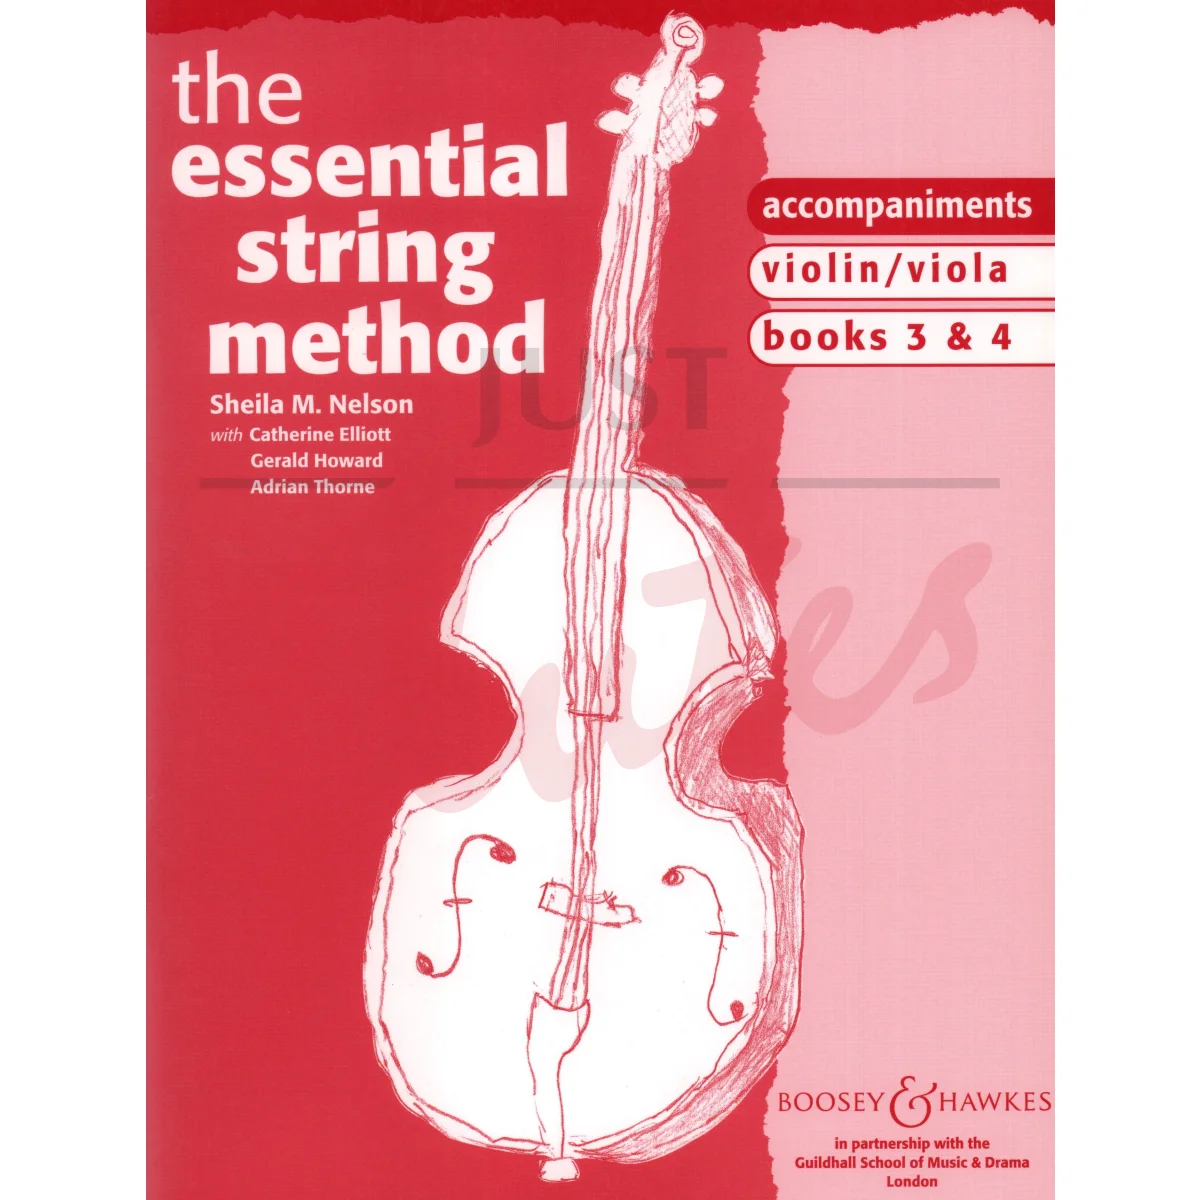 Essential String Method Books 3-4 (Accompaniments)